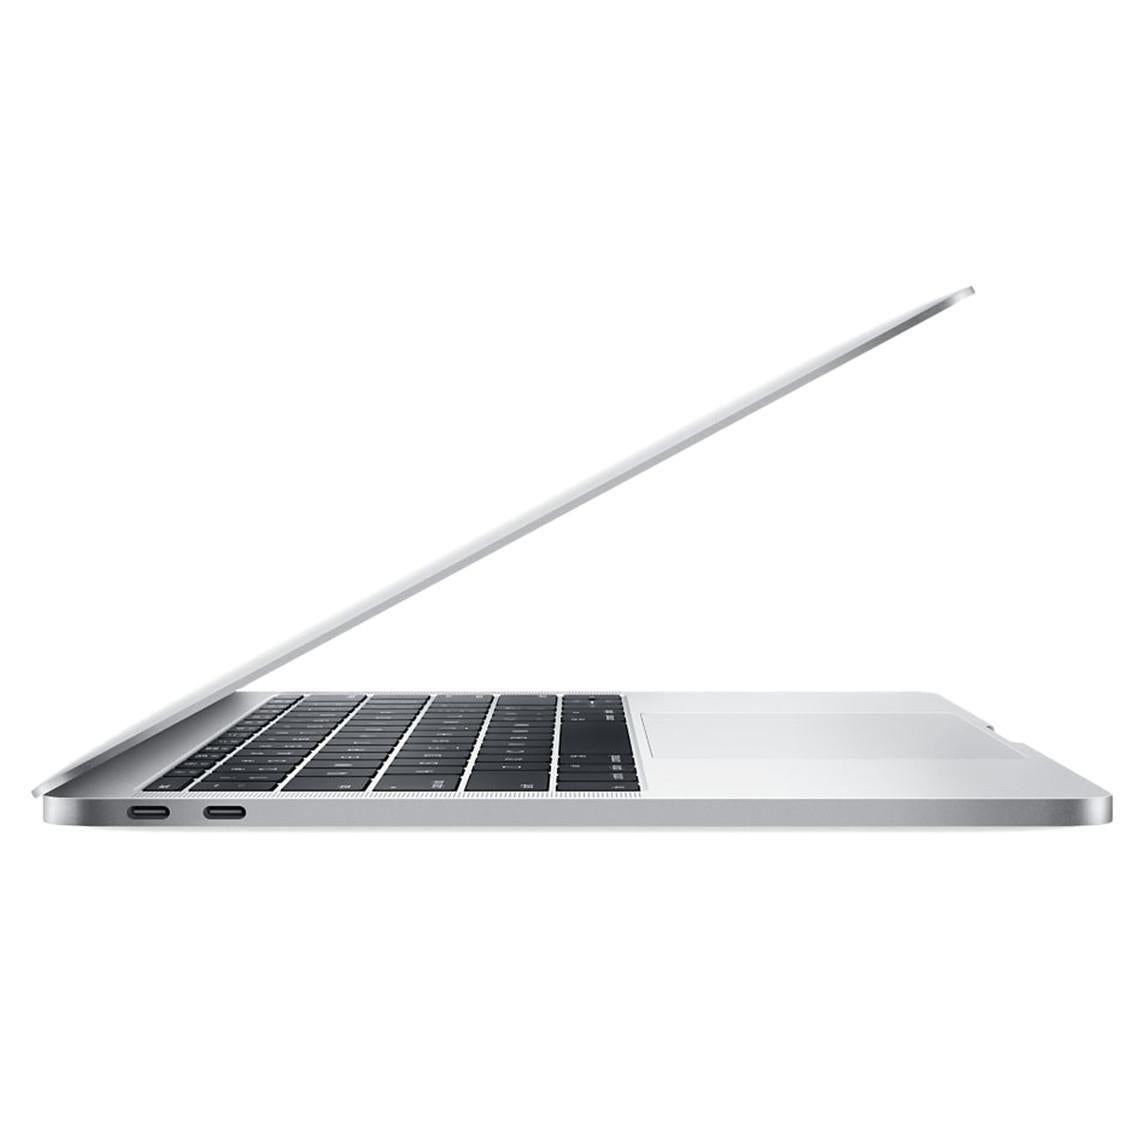 Apple MacBook Pro 13" 2017 i5-7360U 128GB 8GB Silver Portable Laptop C1